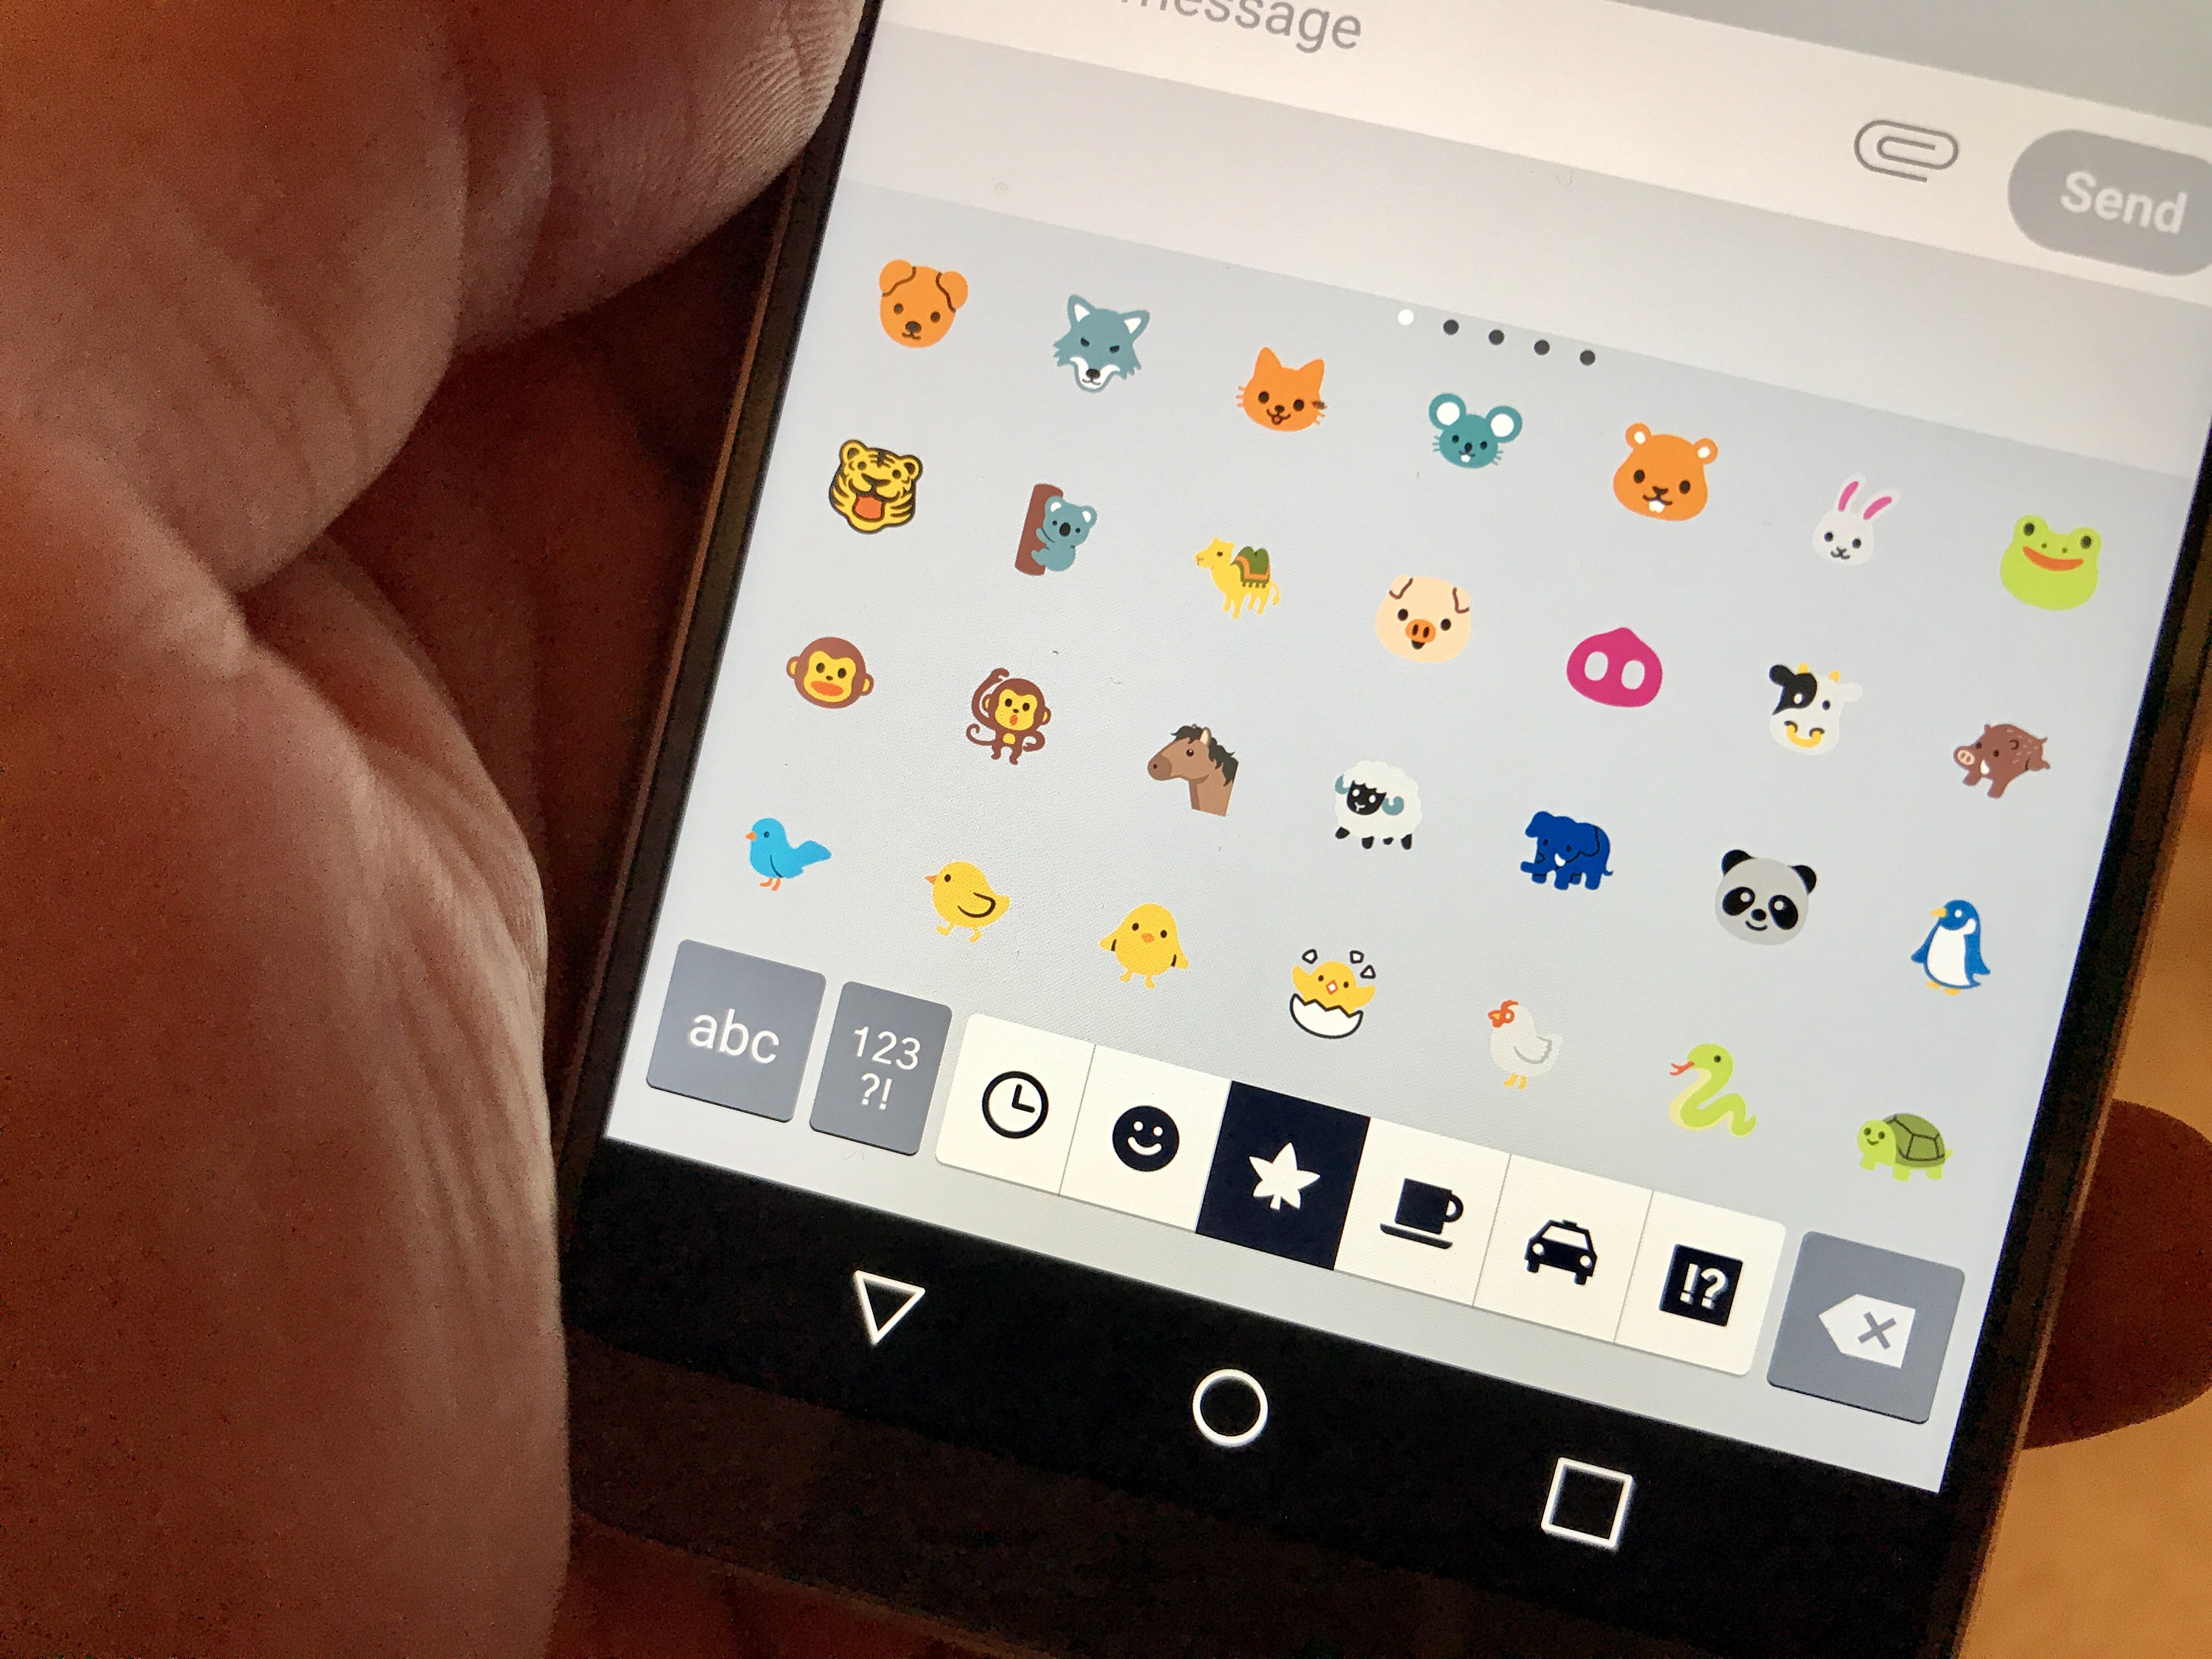 How to use LG G6 emoji.